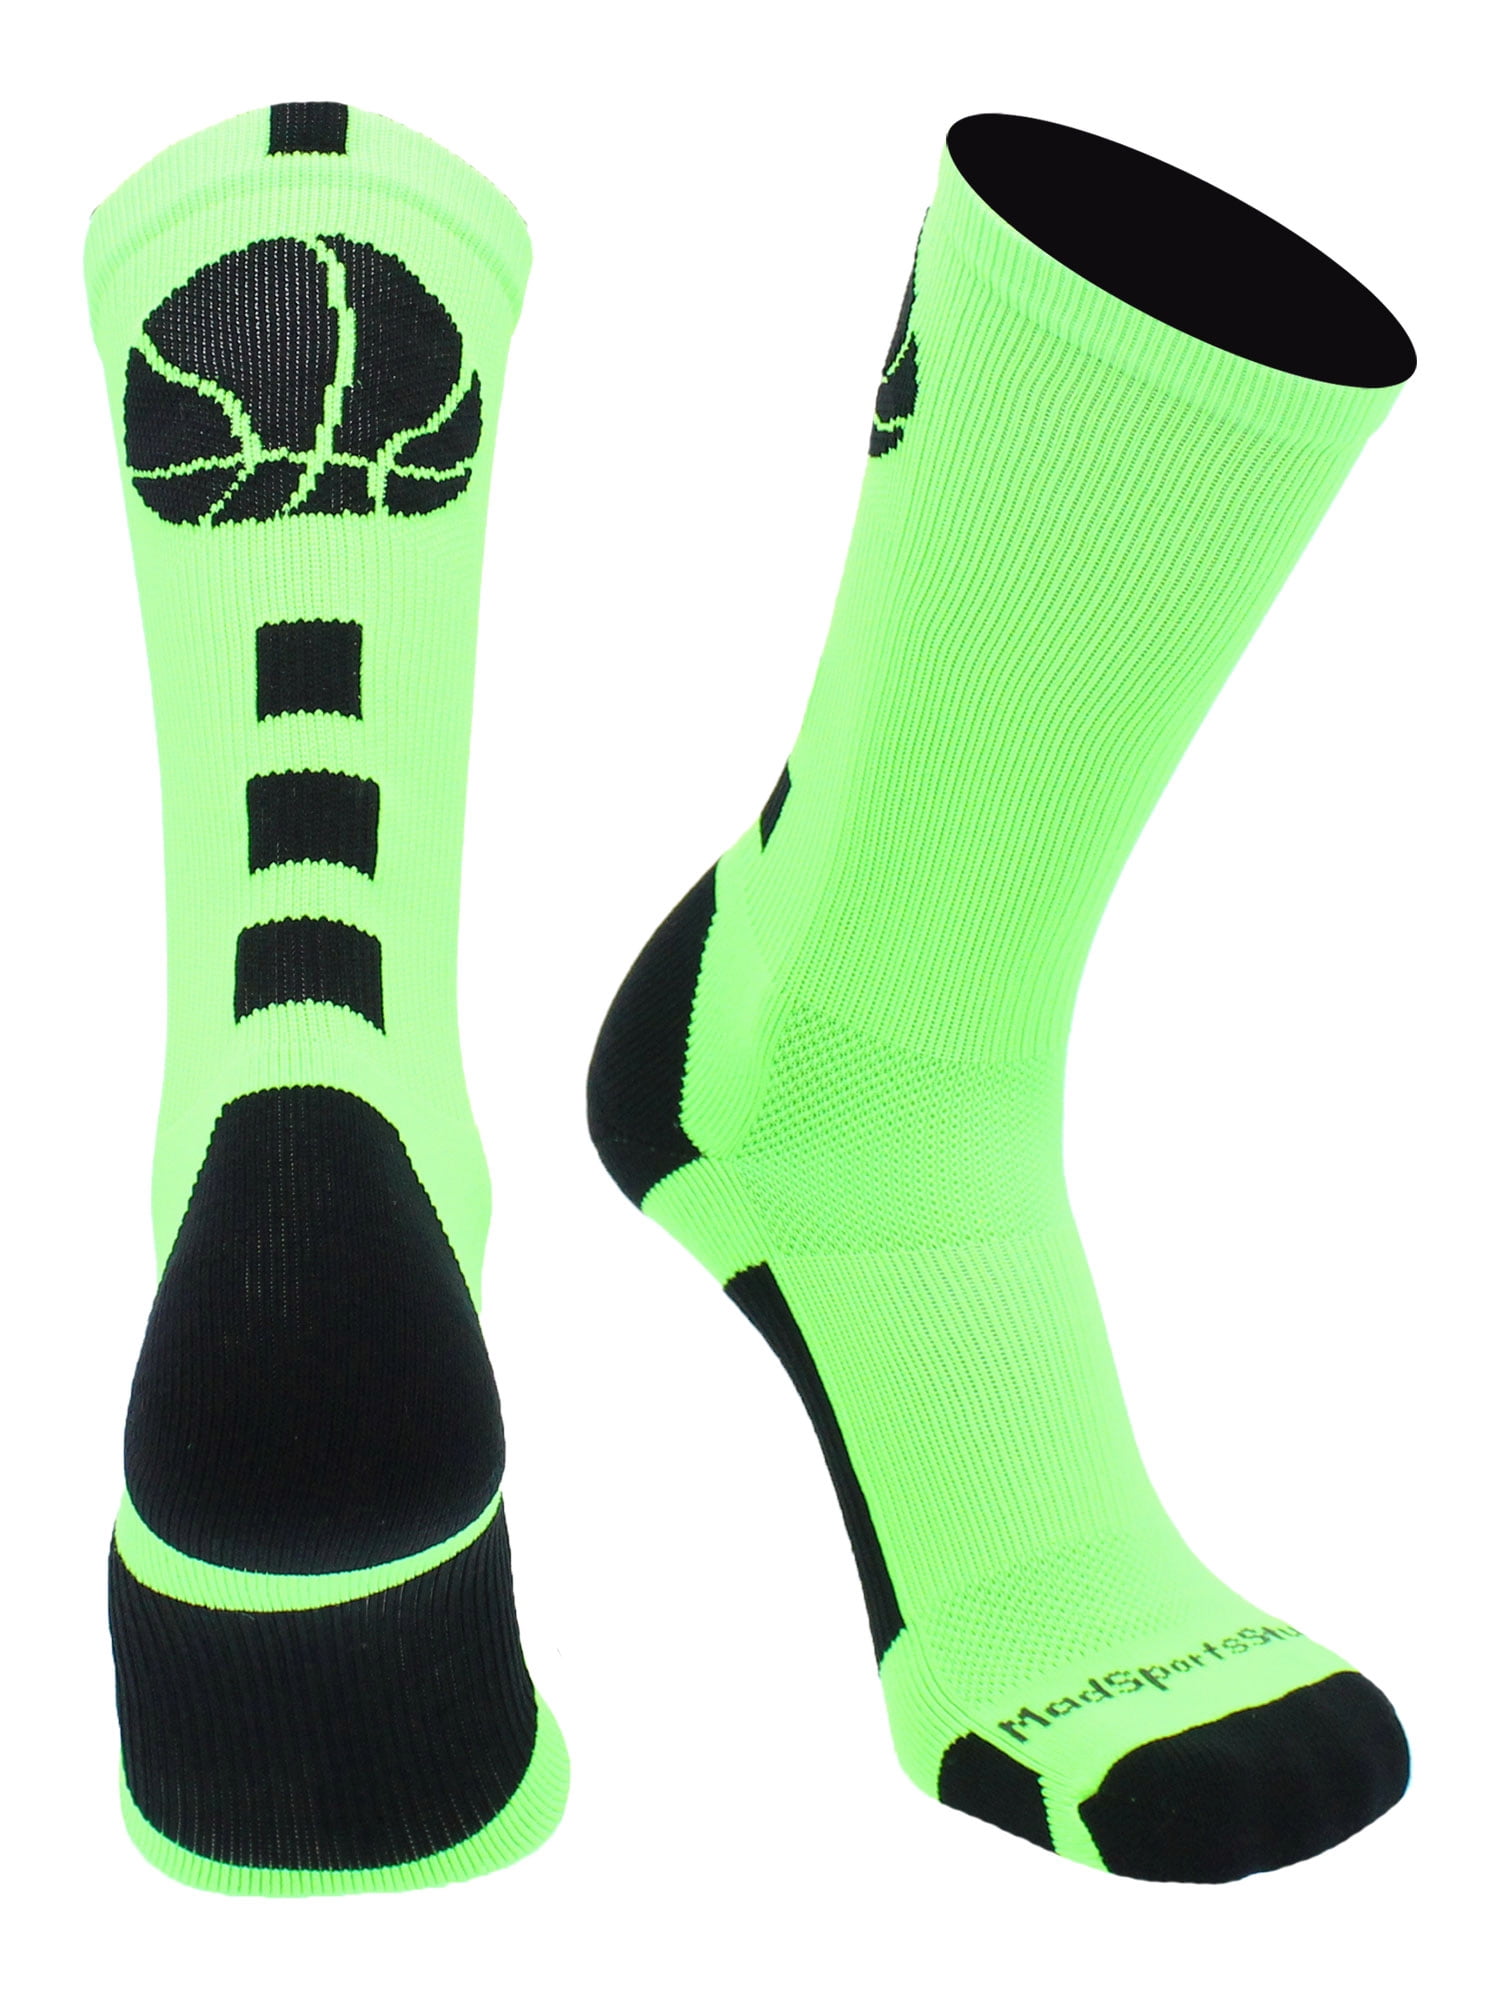 lime green basketball socks